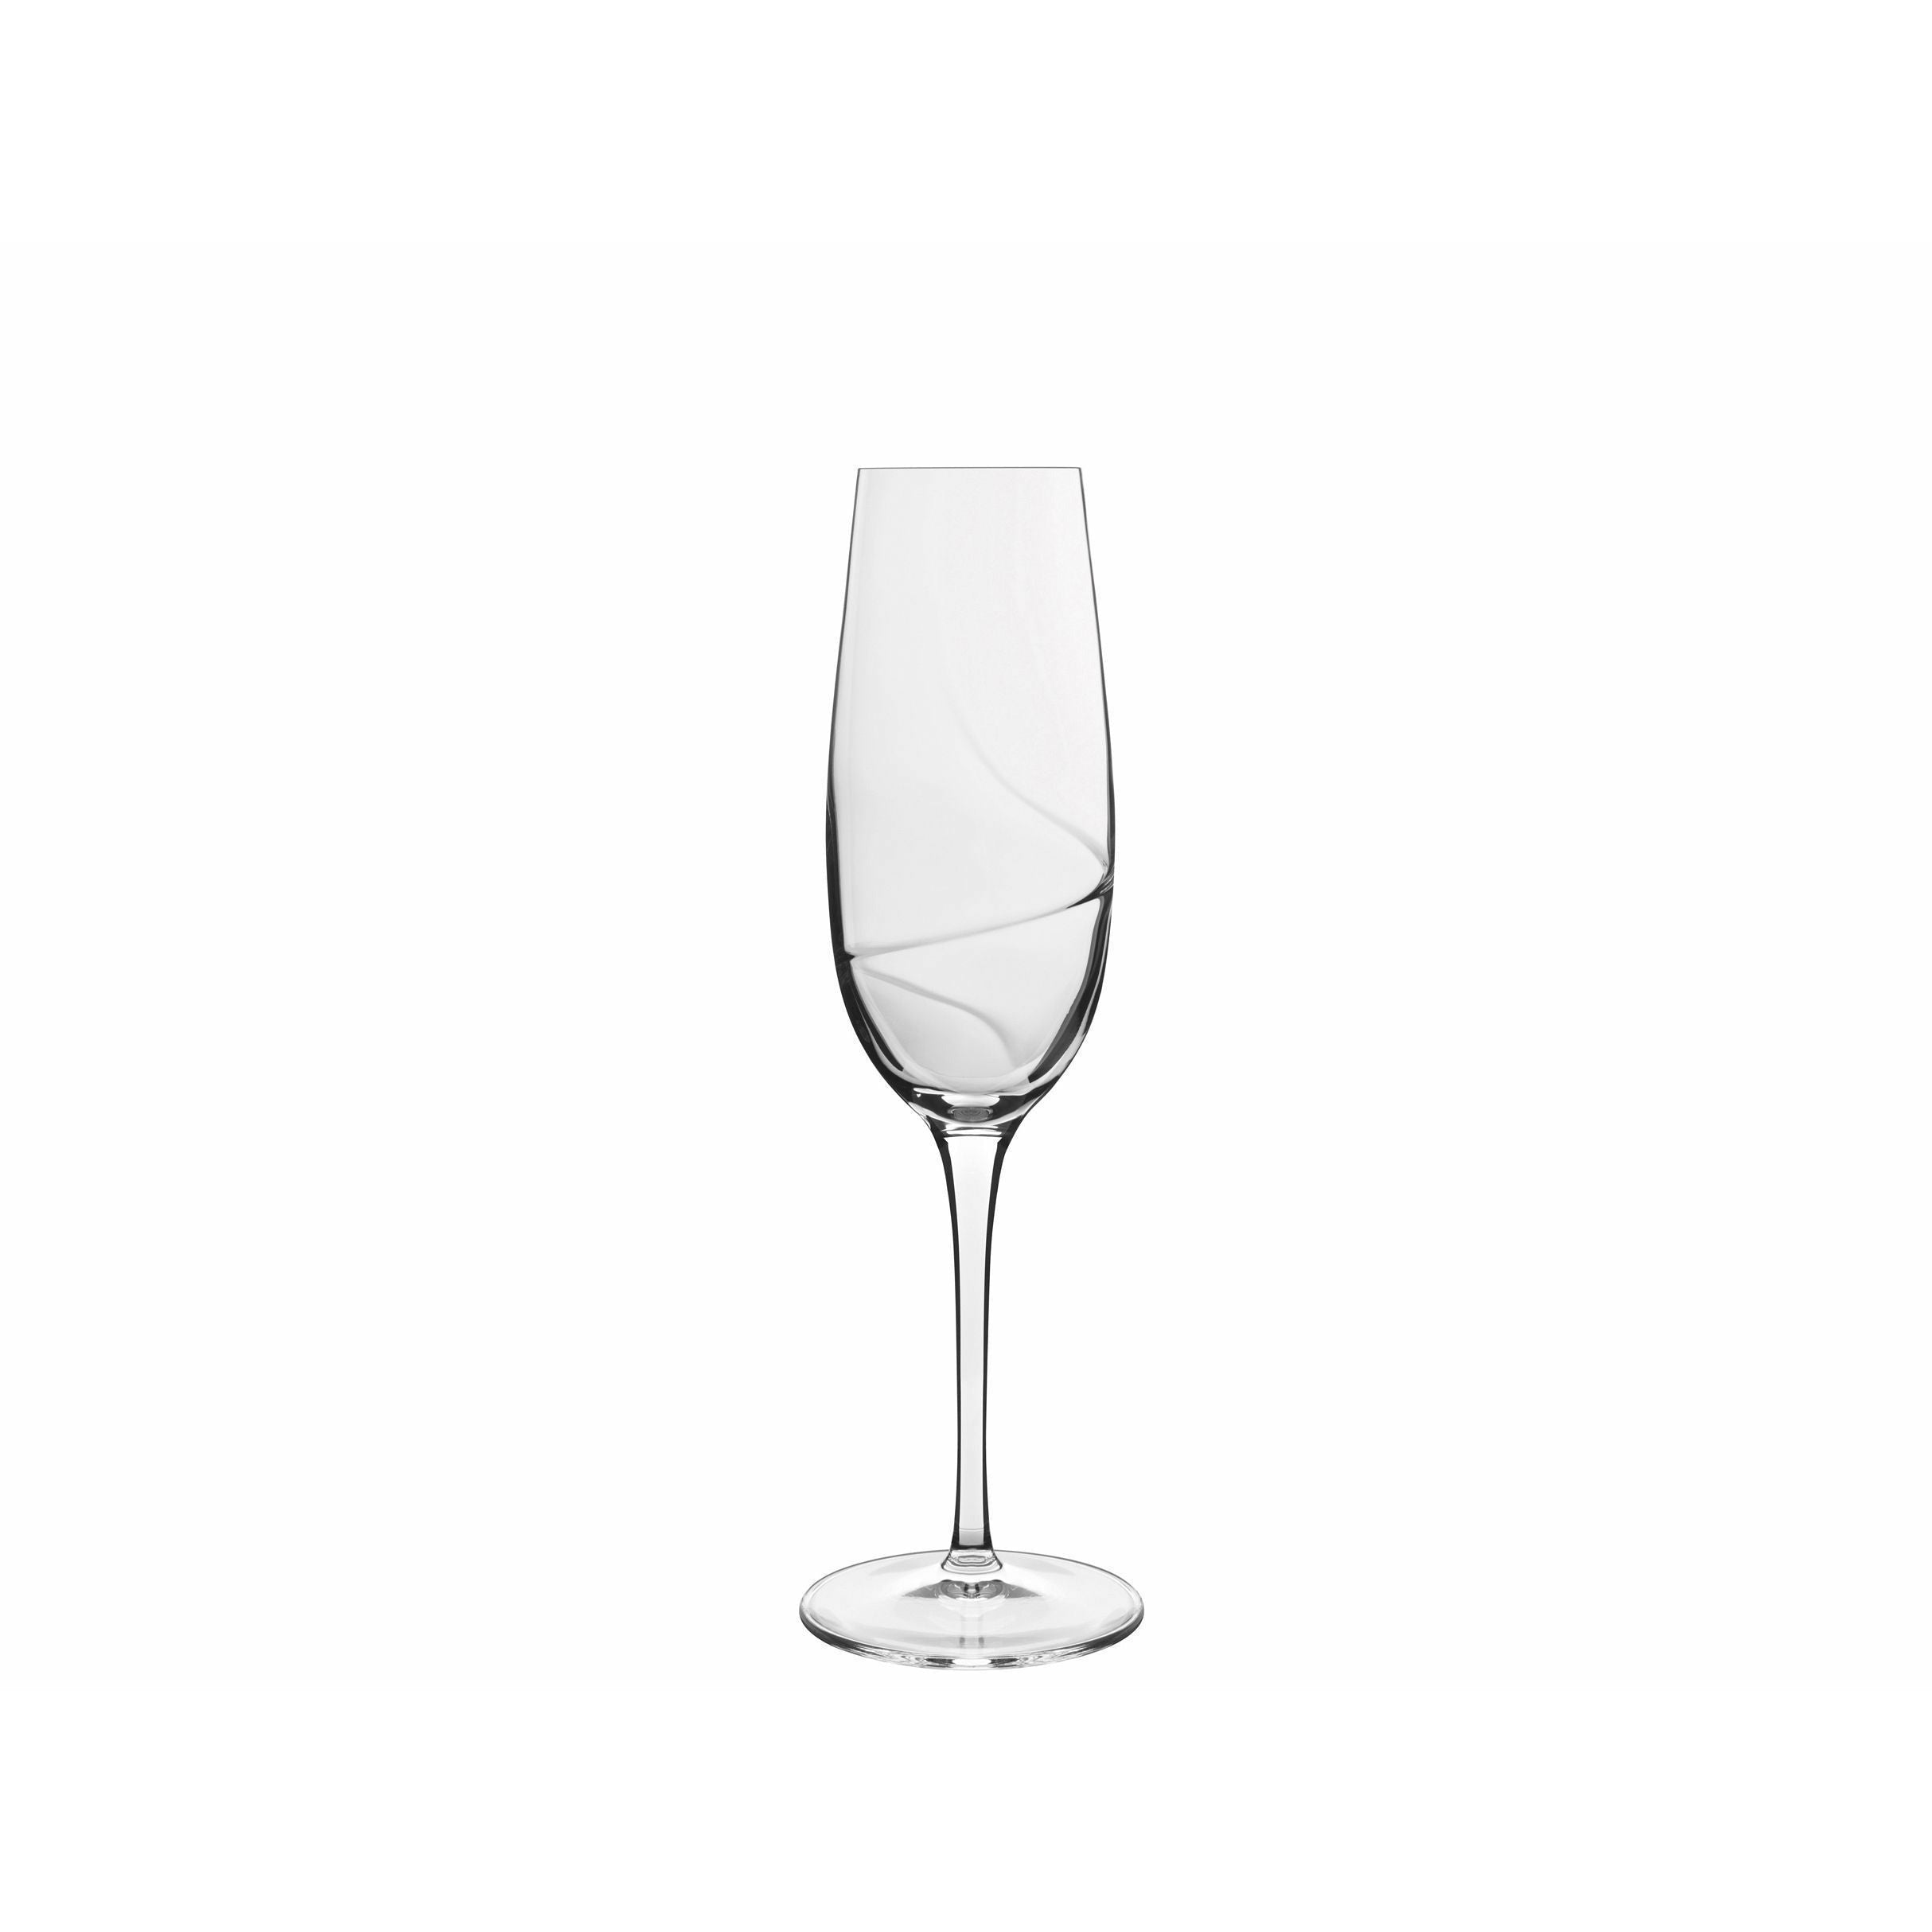 Luigi Bormioli Aero Champagne Glass, 6 st.